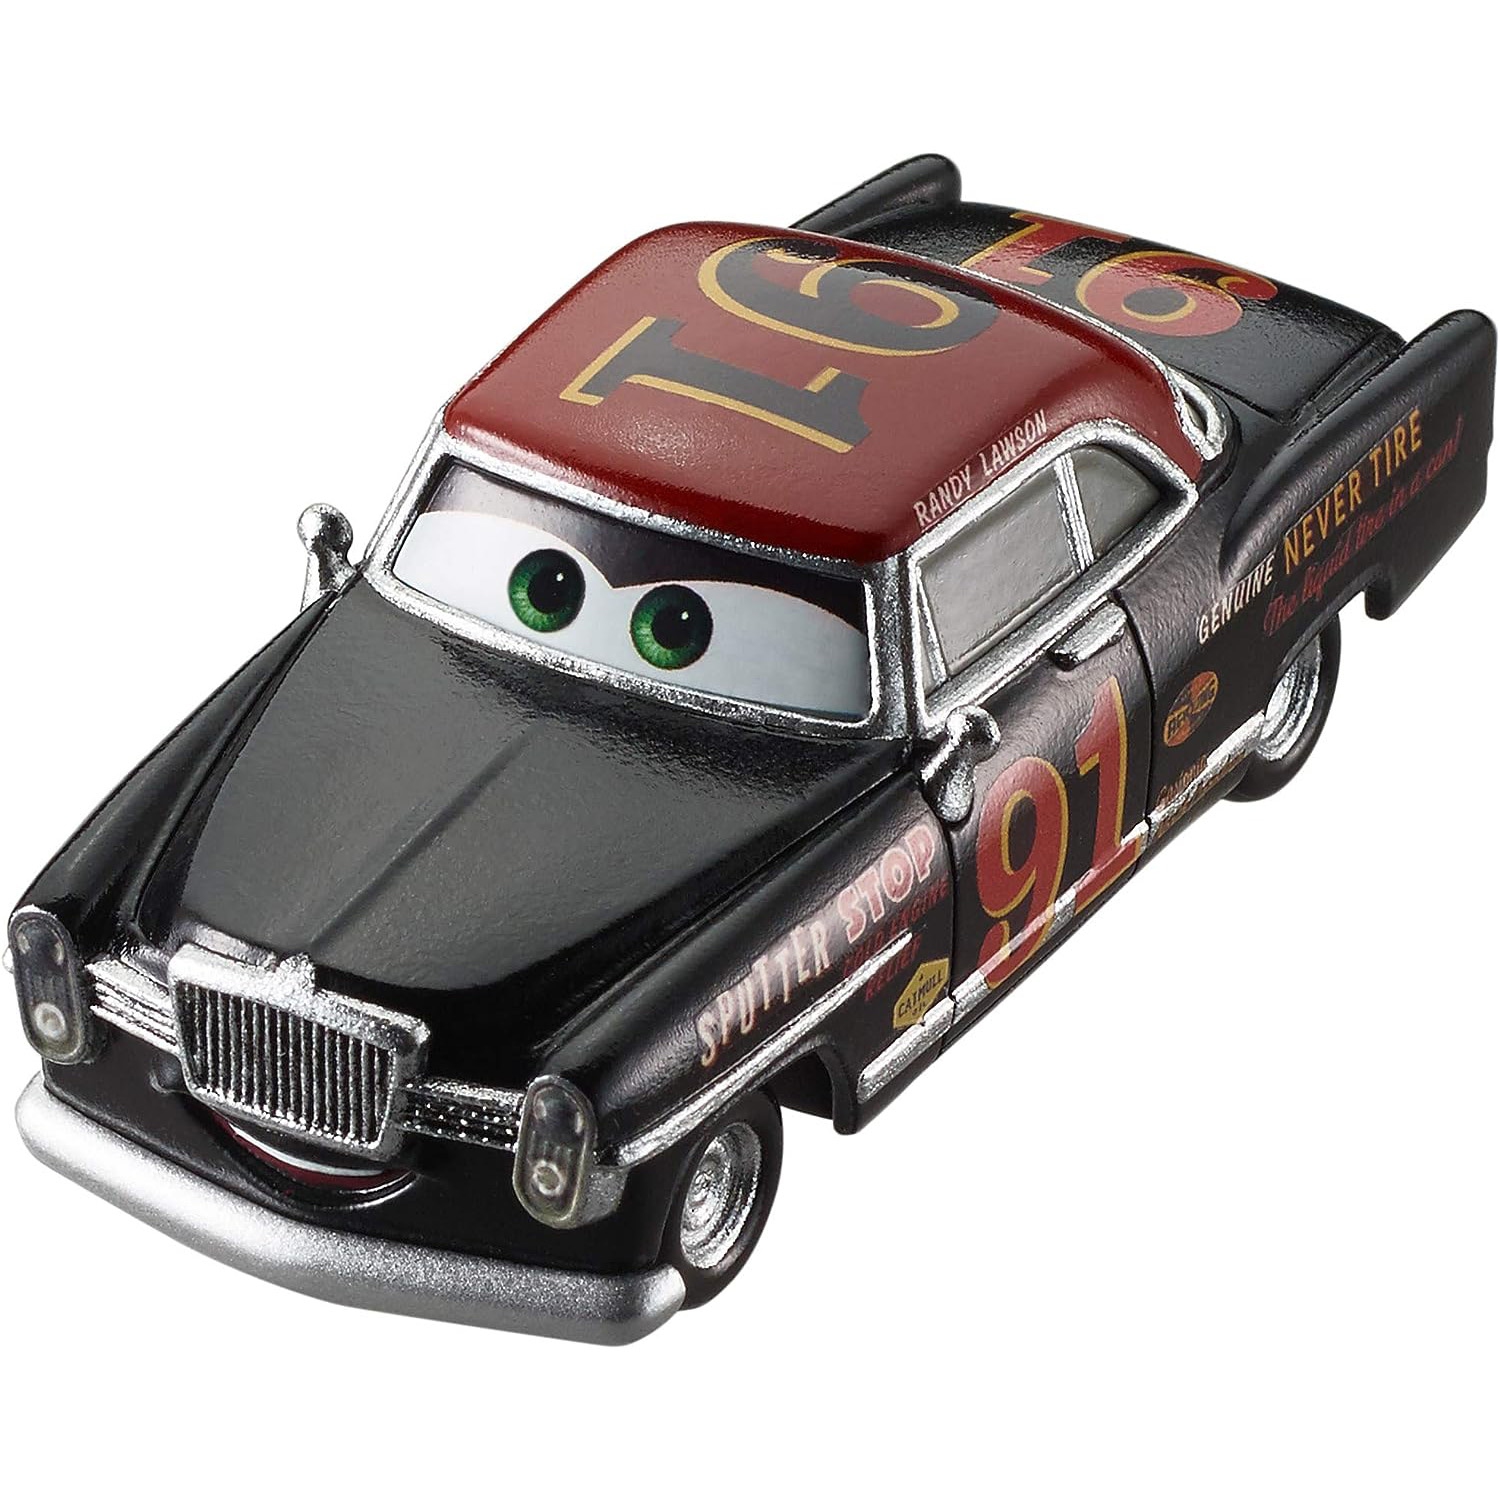 Disney Pixar Cars 1:55 Scale Die-cast Randy Lawson